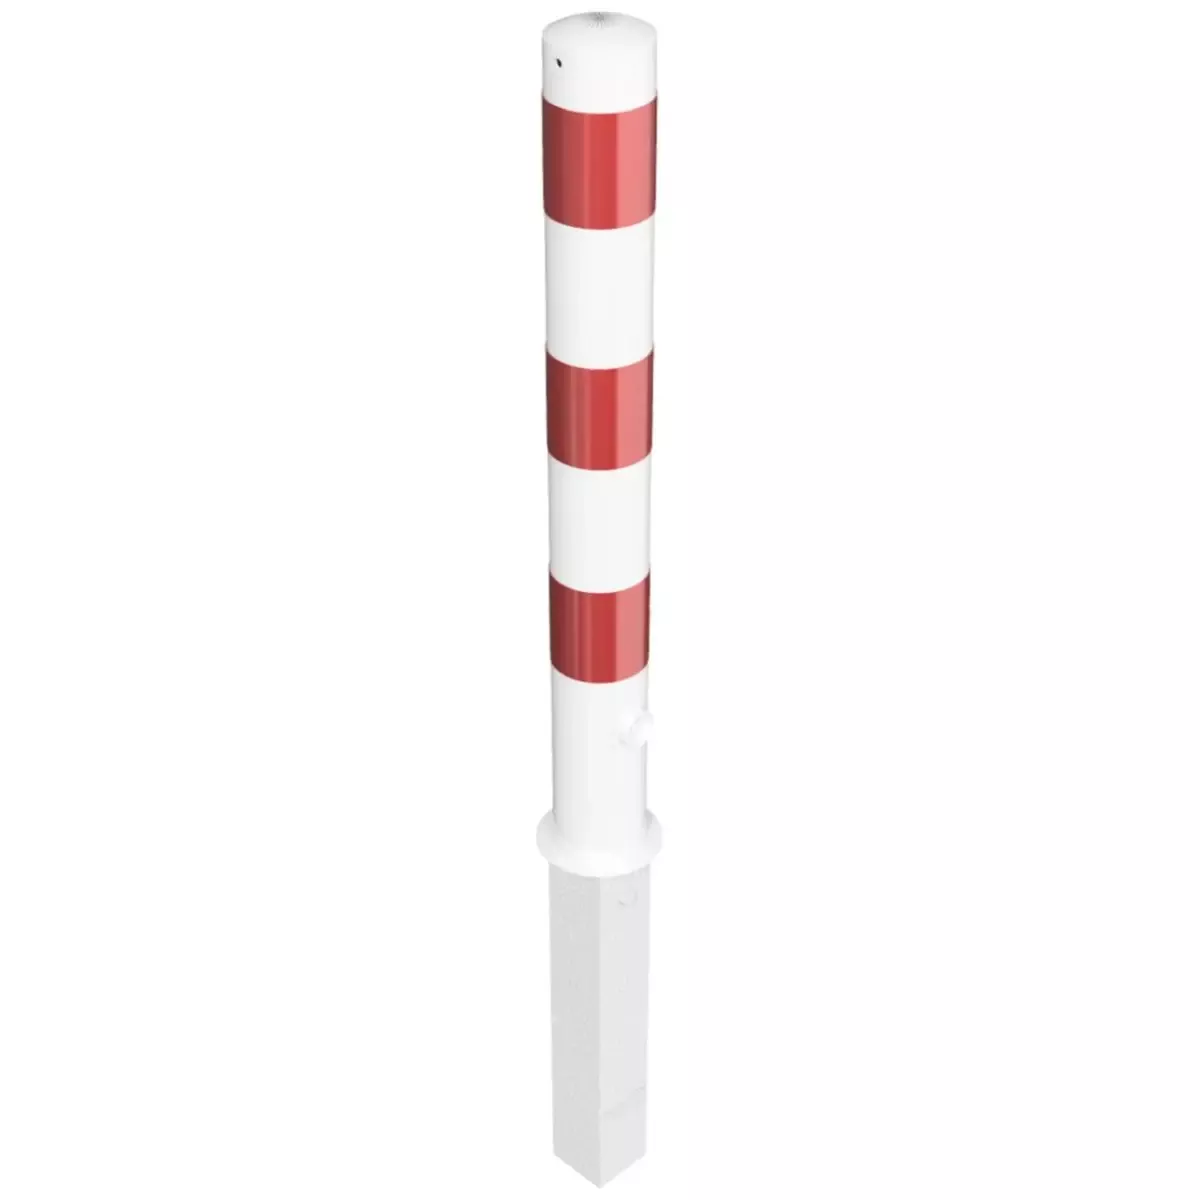 Absperrpfosten Stahlrohr Ø 102 x 2,5 mm ohne Öse, herausnehmbar mit Dreikantverschluss, weiß-rot (inkl. Bodenhülse)